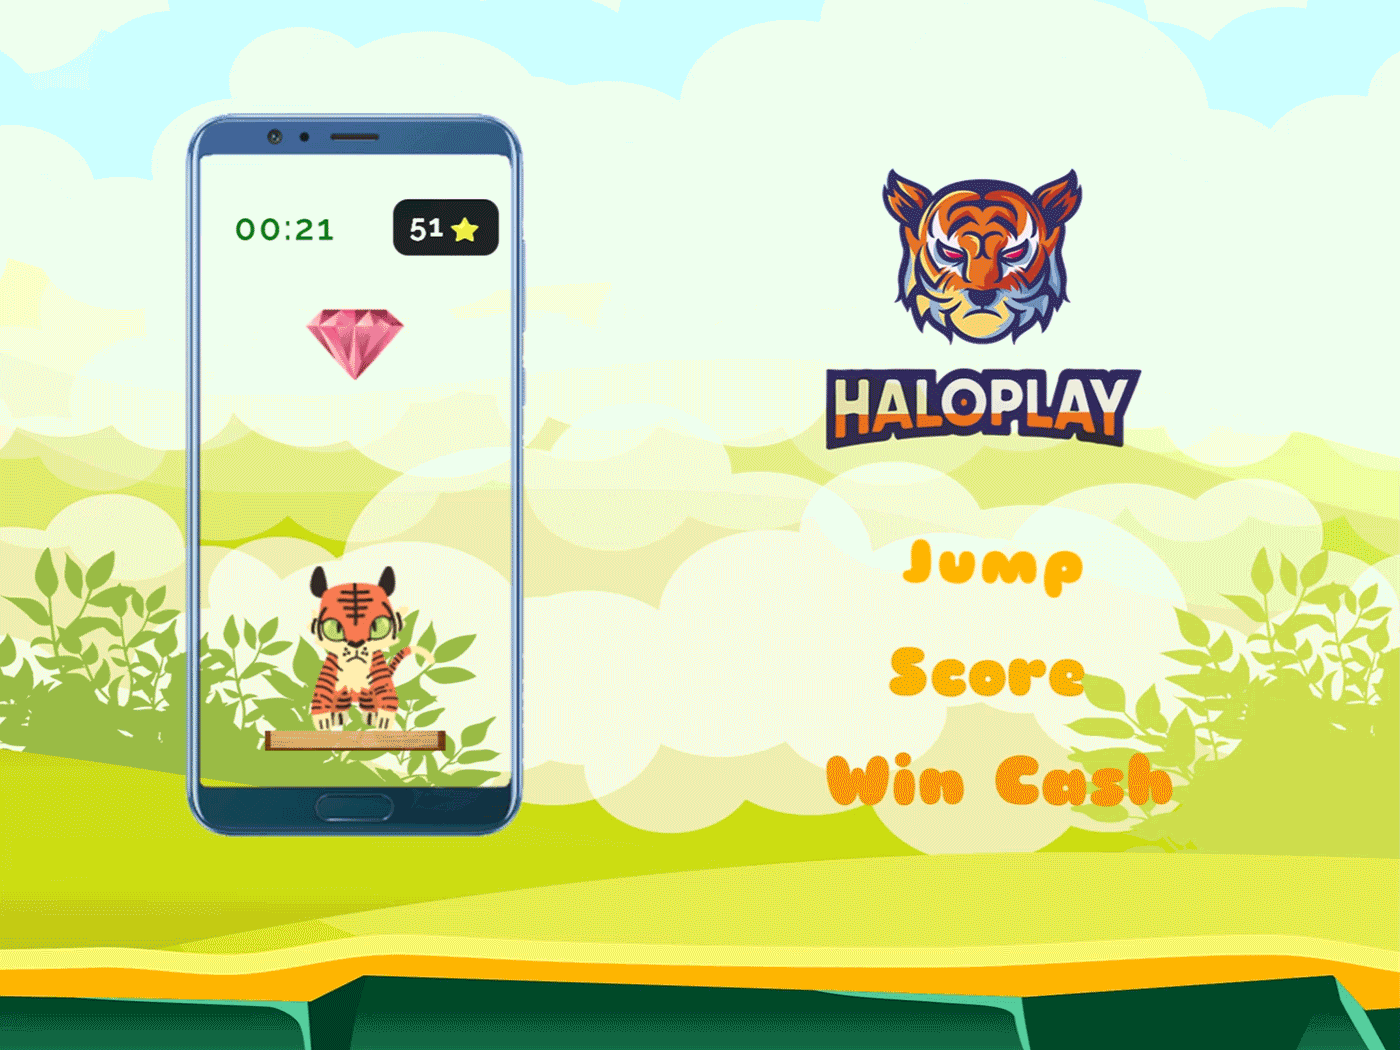 advertisement android application earn money game gameapp haloplay social media socialmediaadvertisement tiger